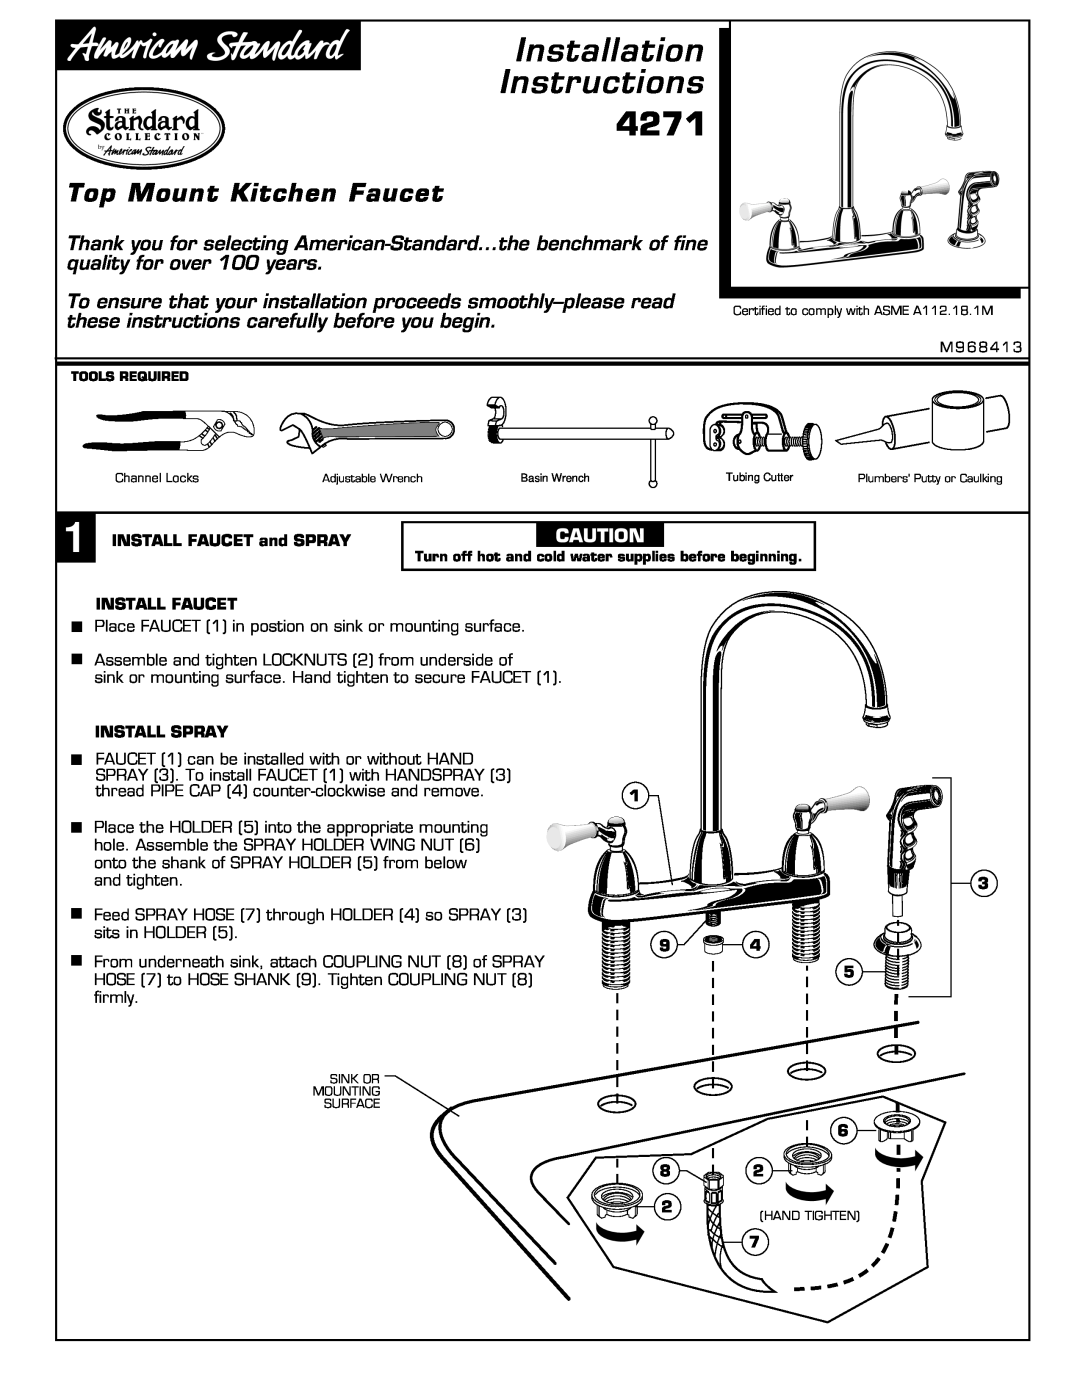 American Standard 4271 installation instructions Top Mount Kitchen Faucet, Installation Instructions 